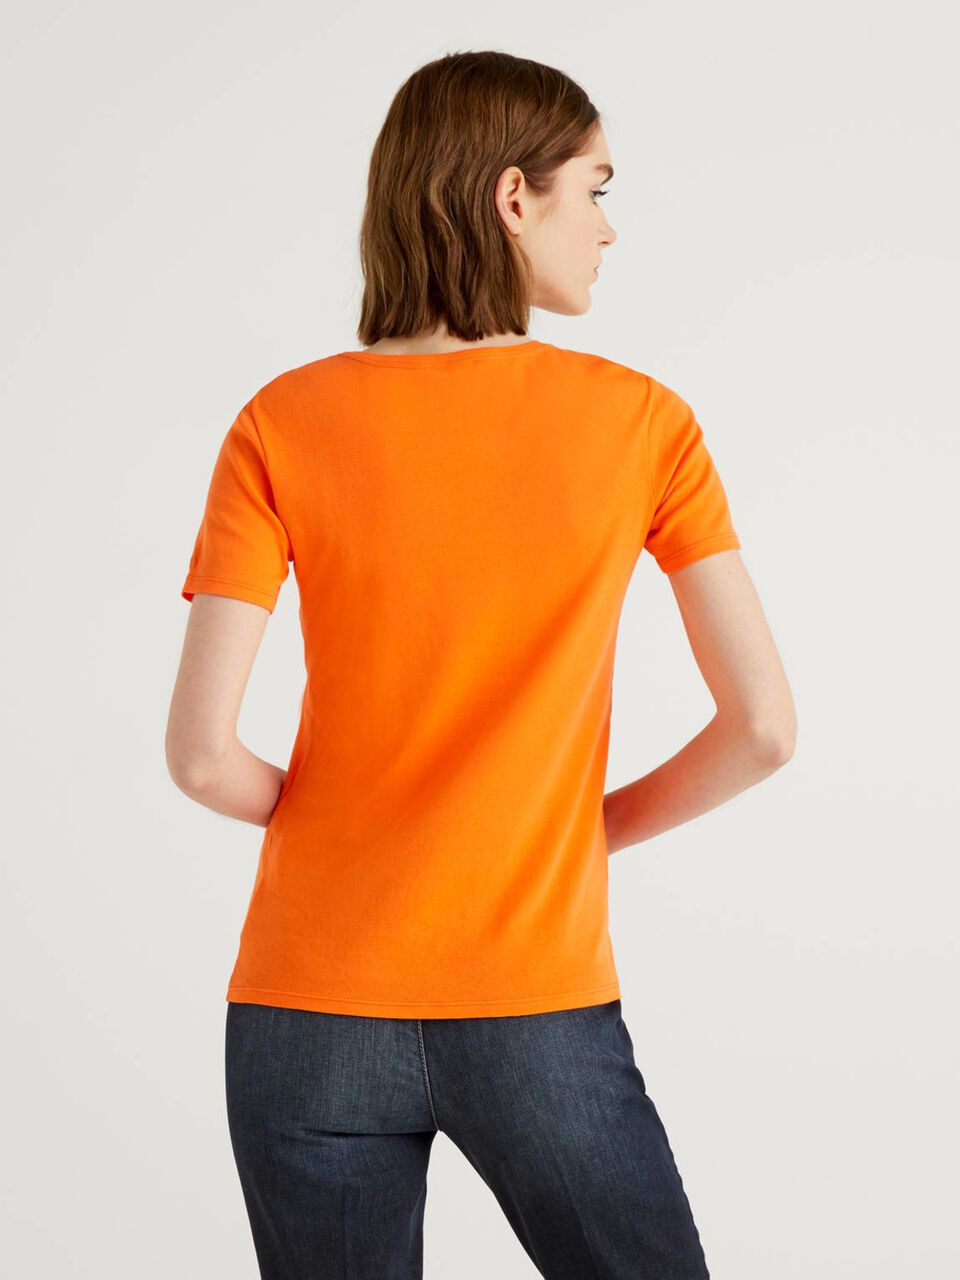 Customizable long fiber cotton t-shirt